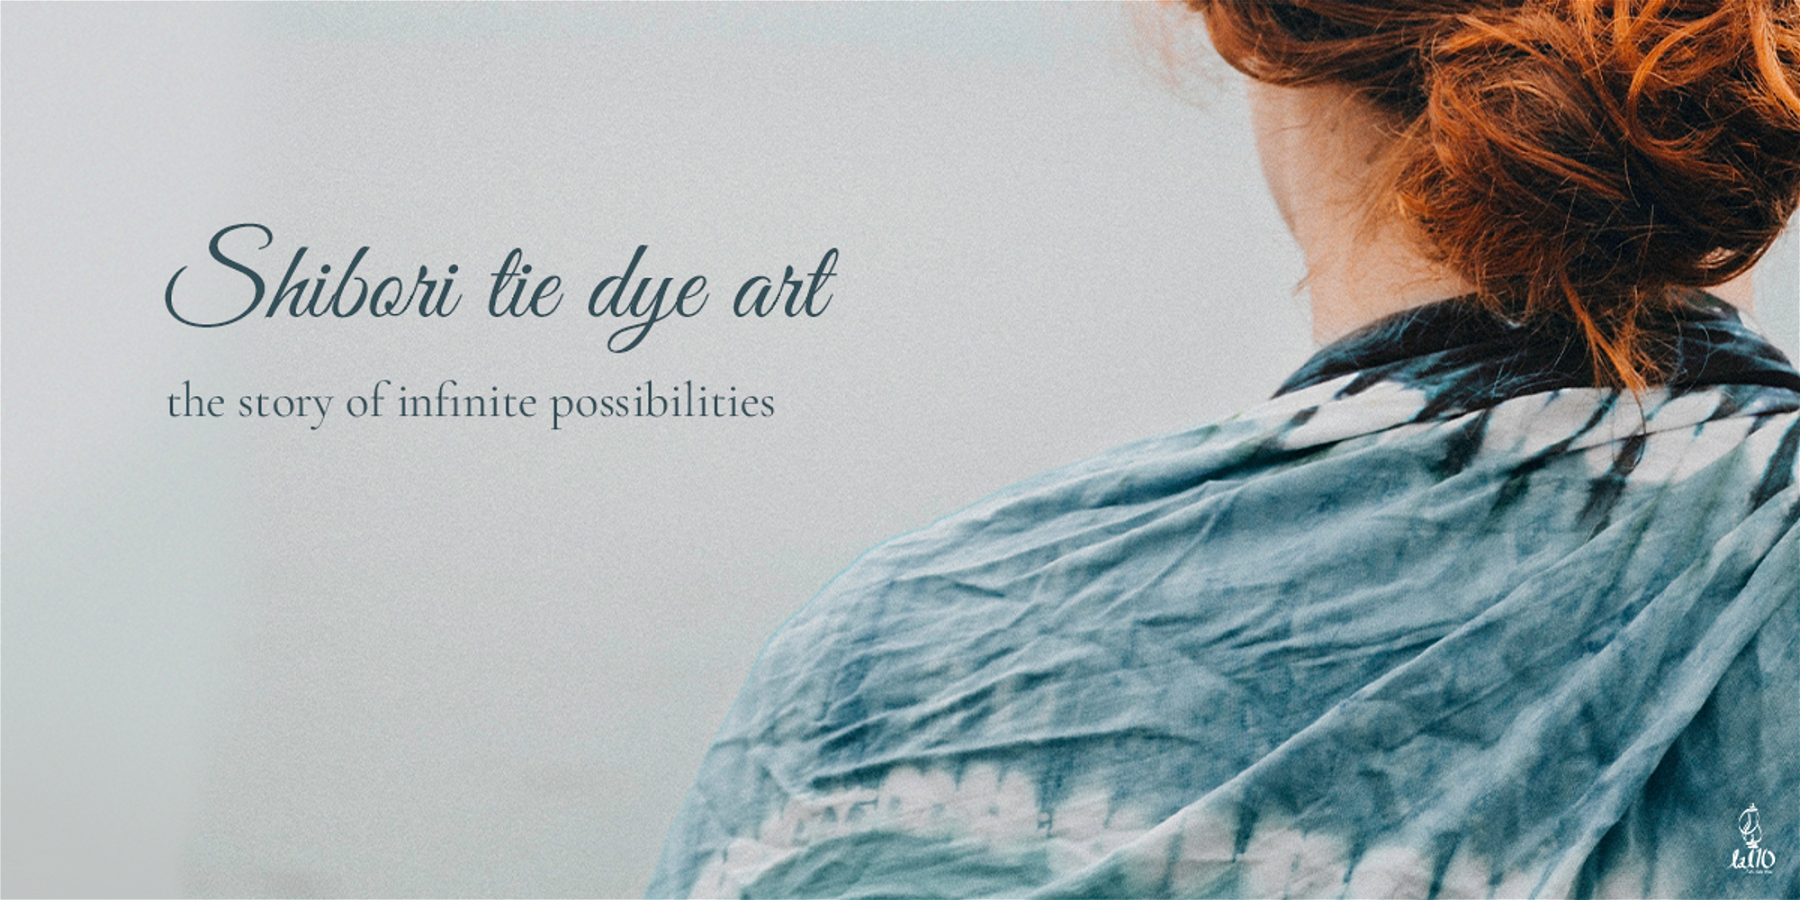 Shibori tie dye art: the story of infinite possibilities